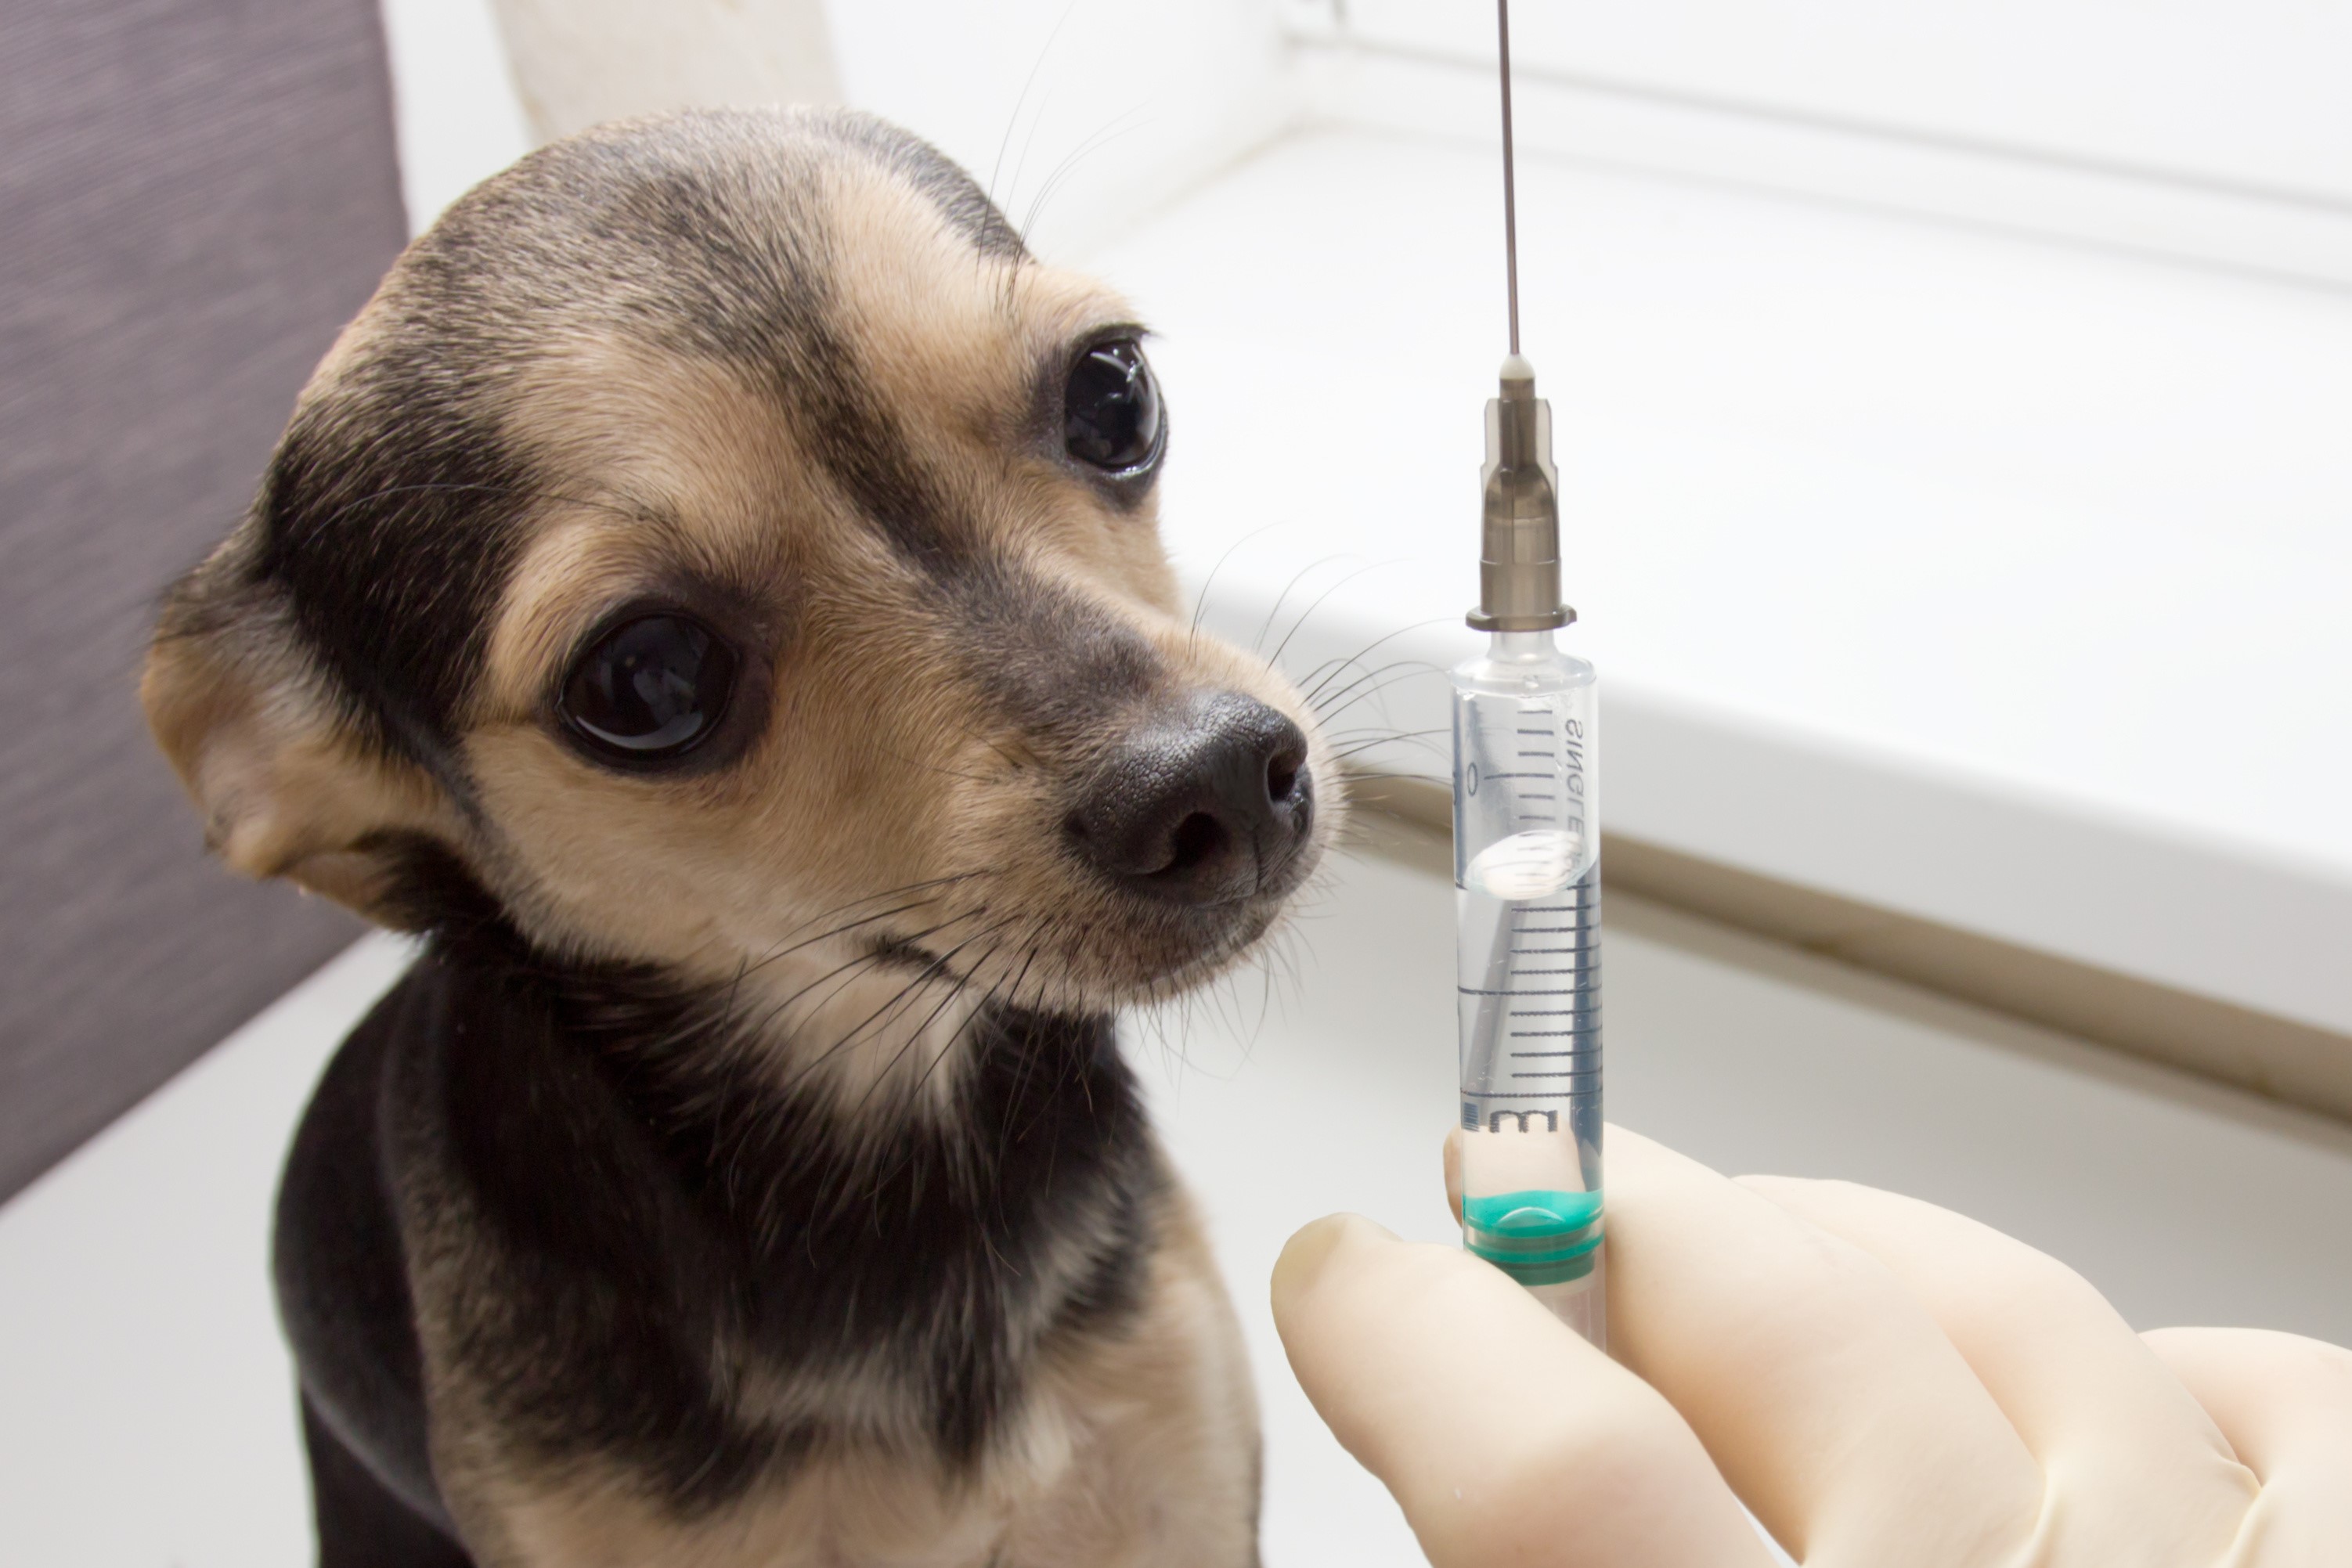 Vaccinate your pet animals